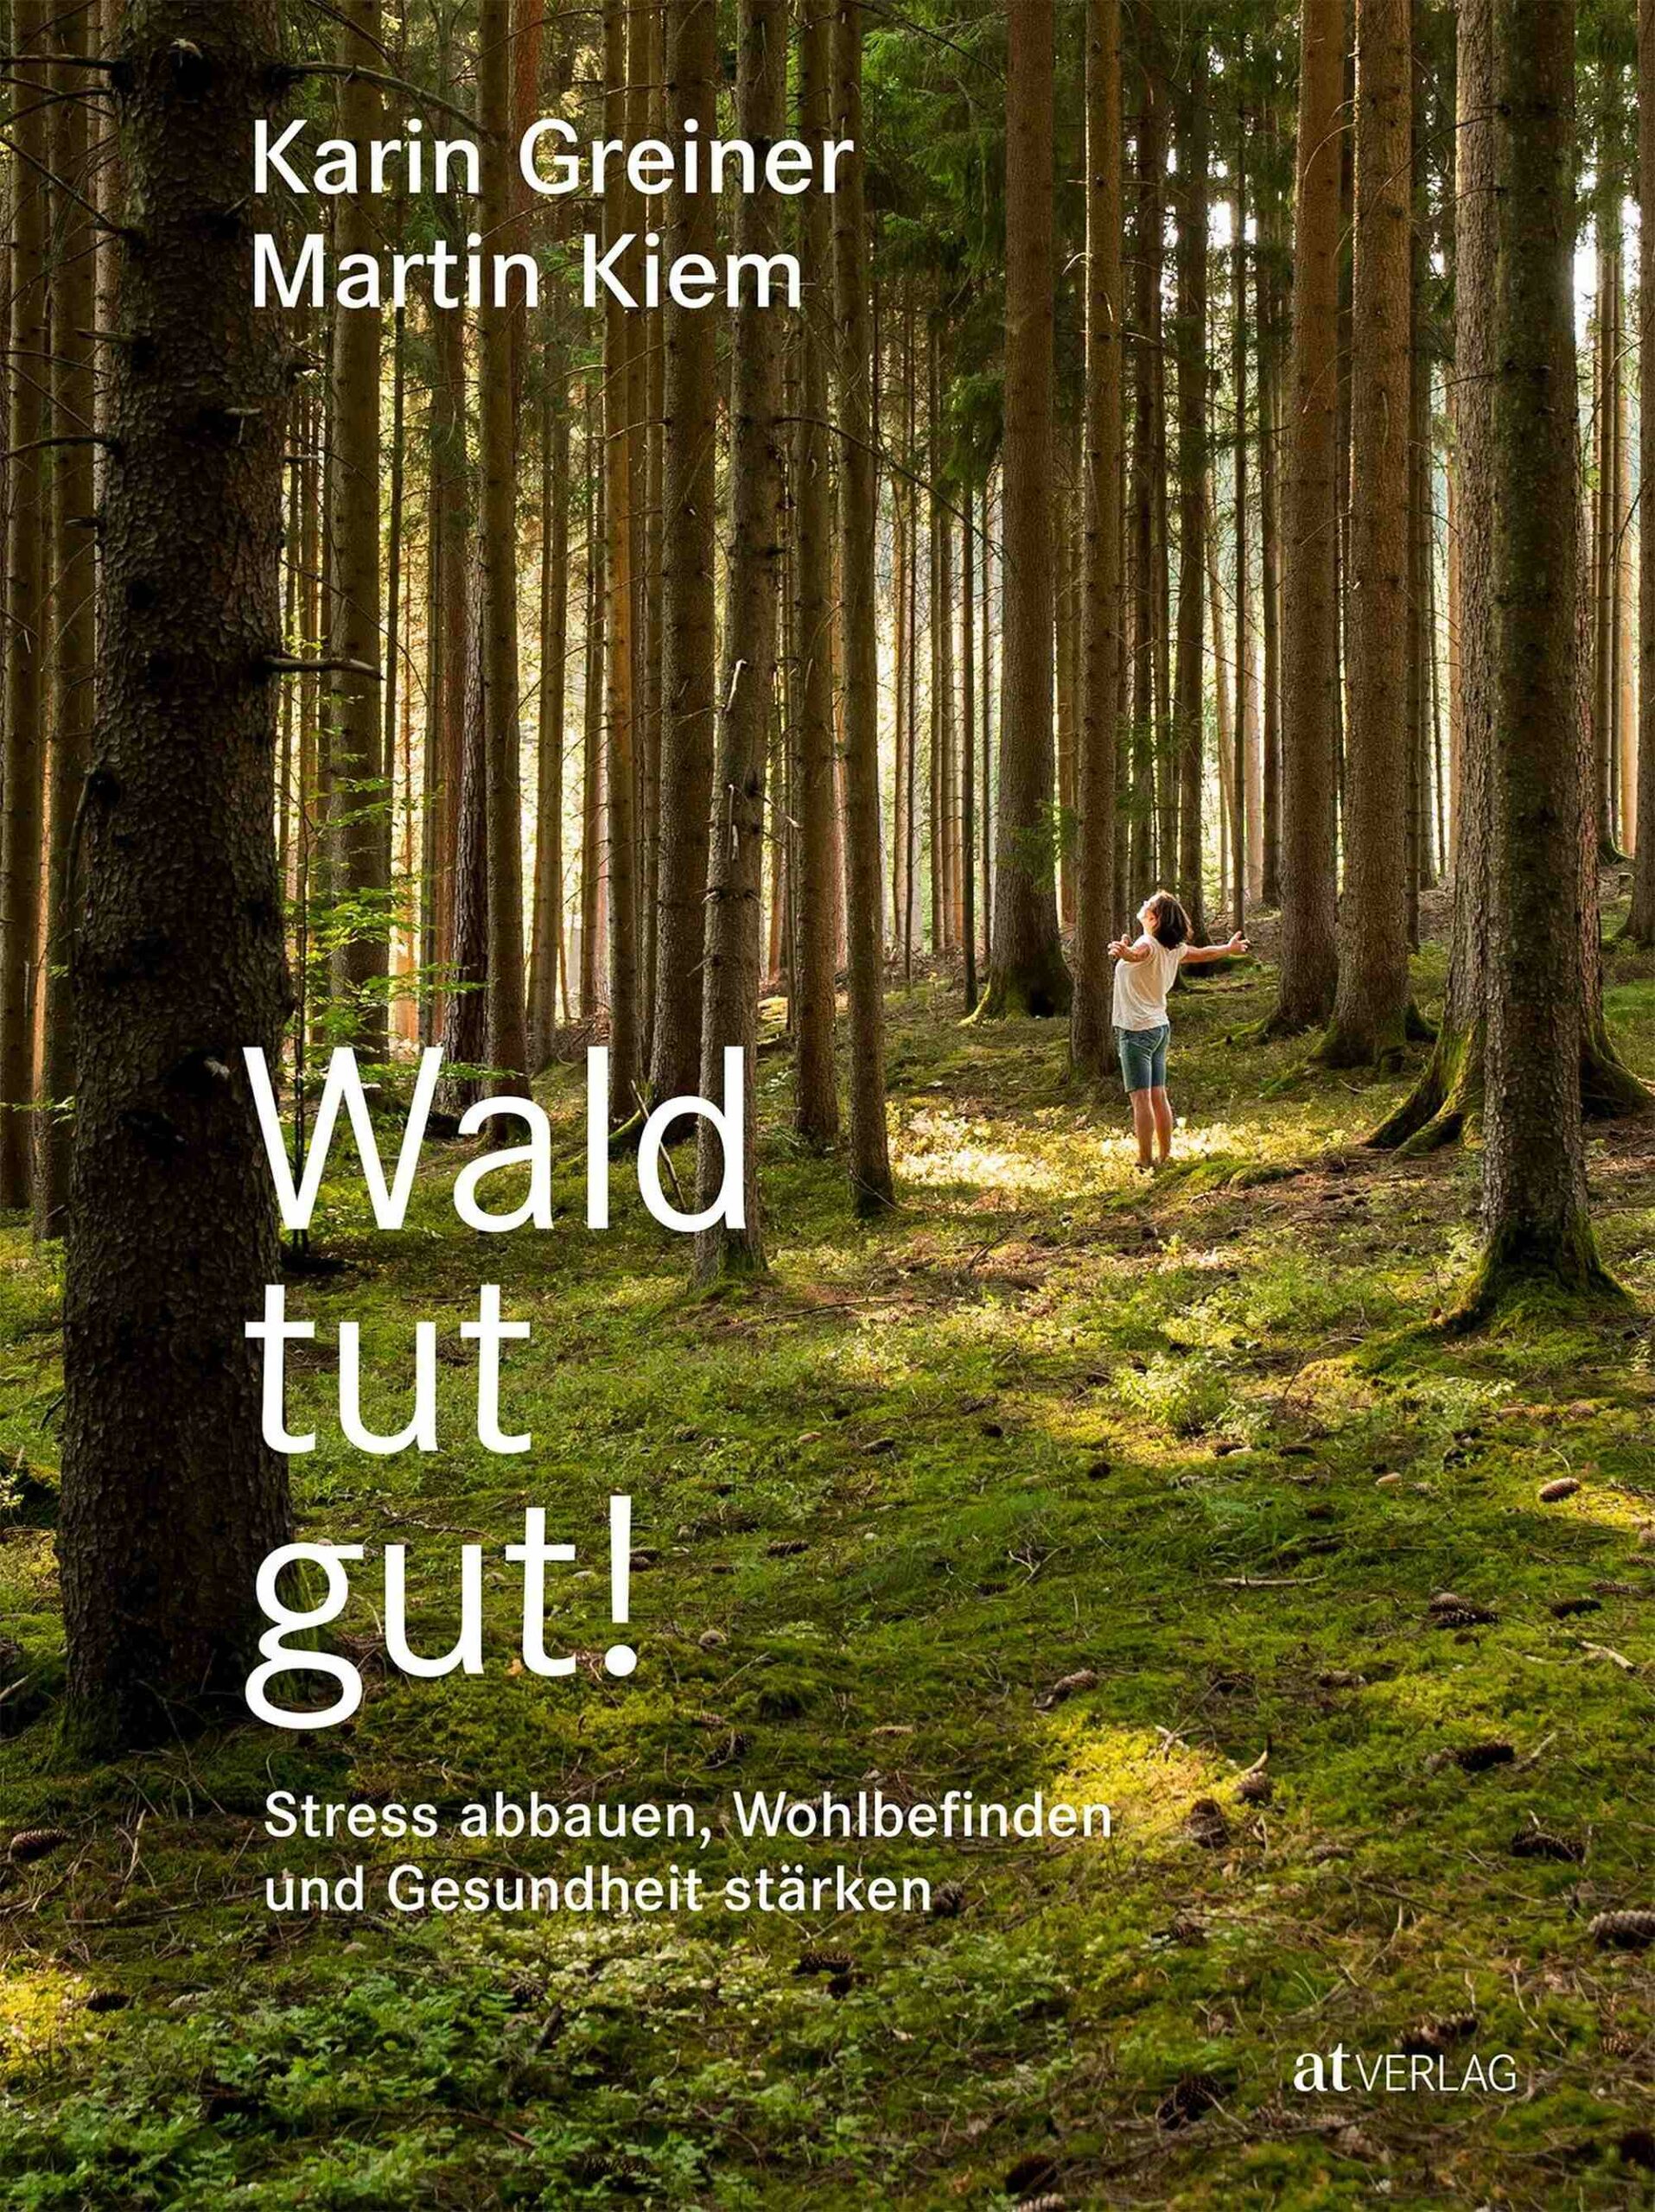 Cover Wald tut gut (c) Martina Weise